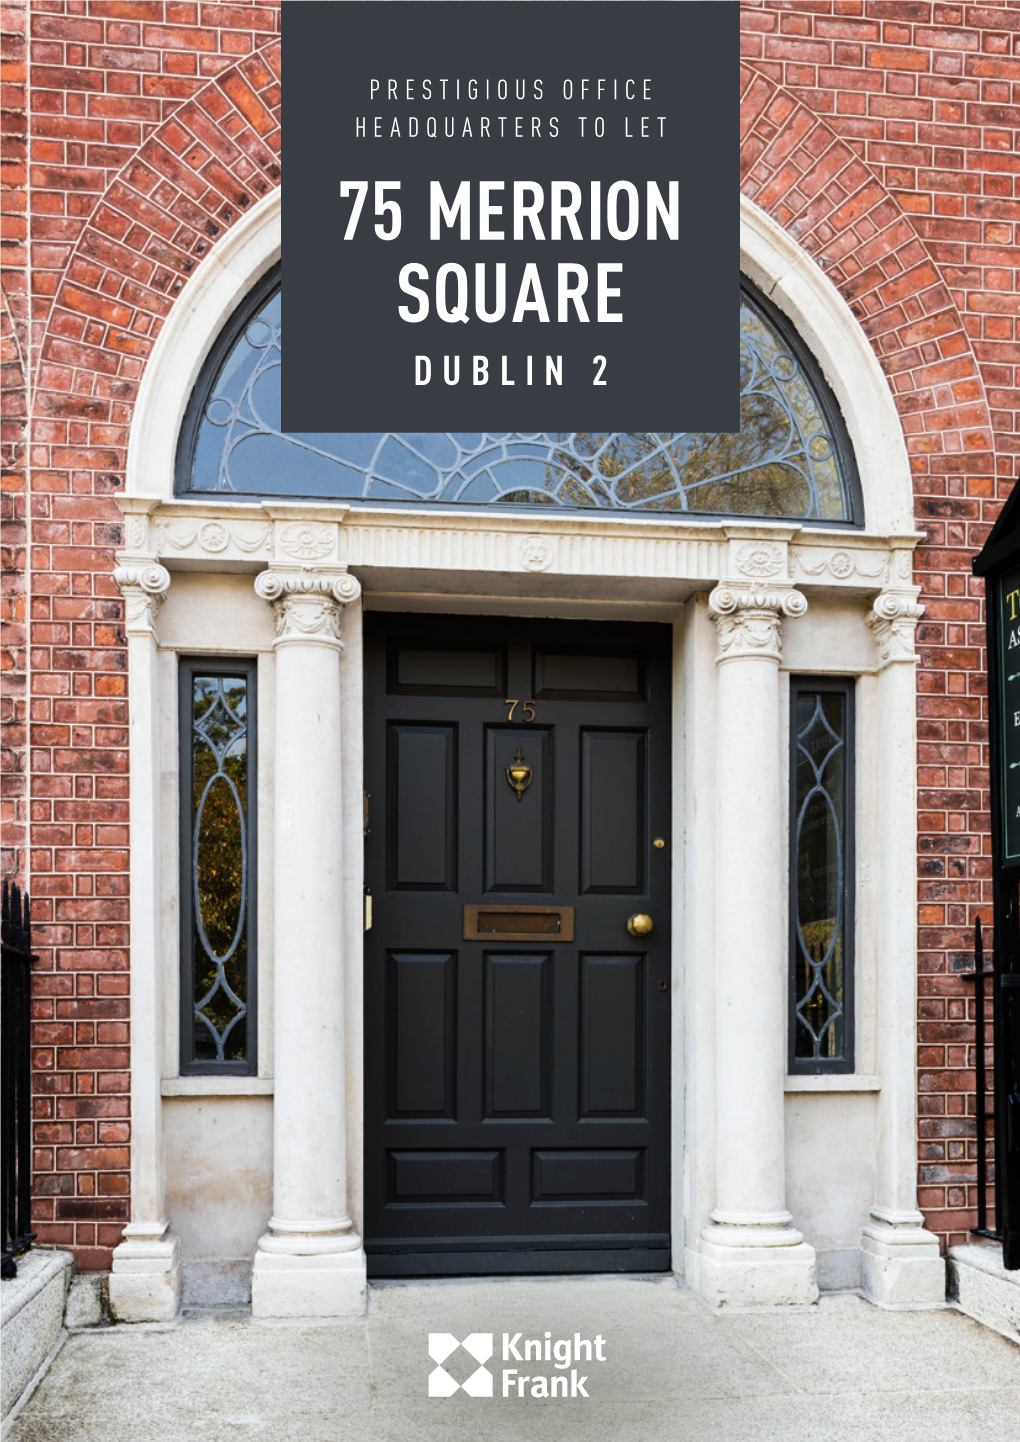 75 Merrion Square Dublin 2 Location